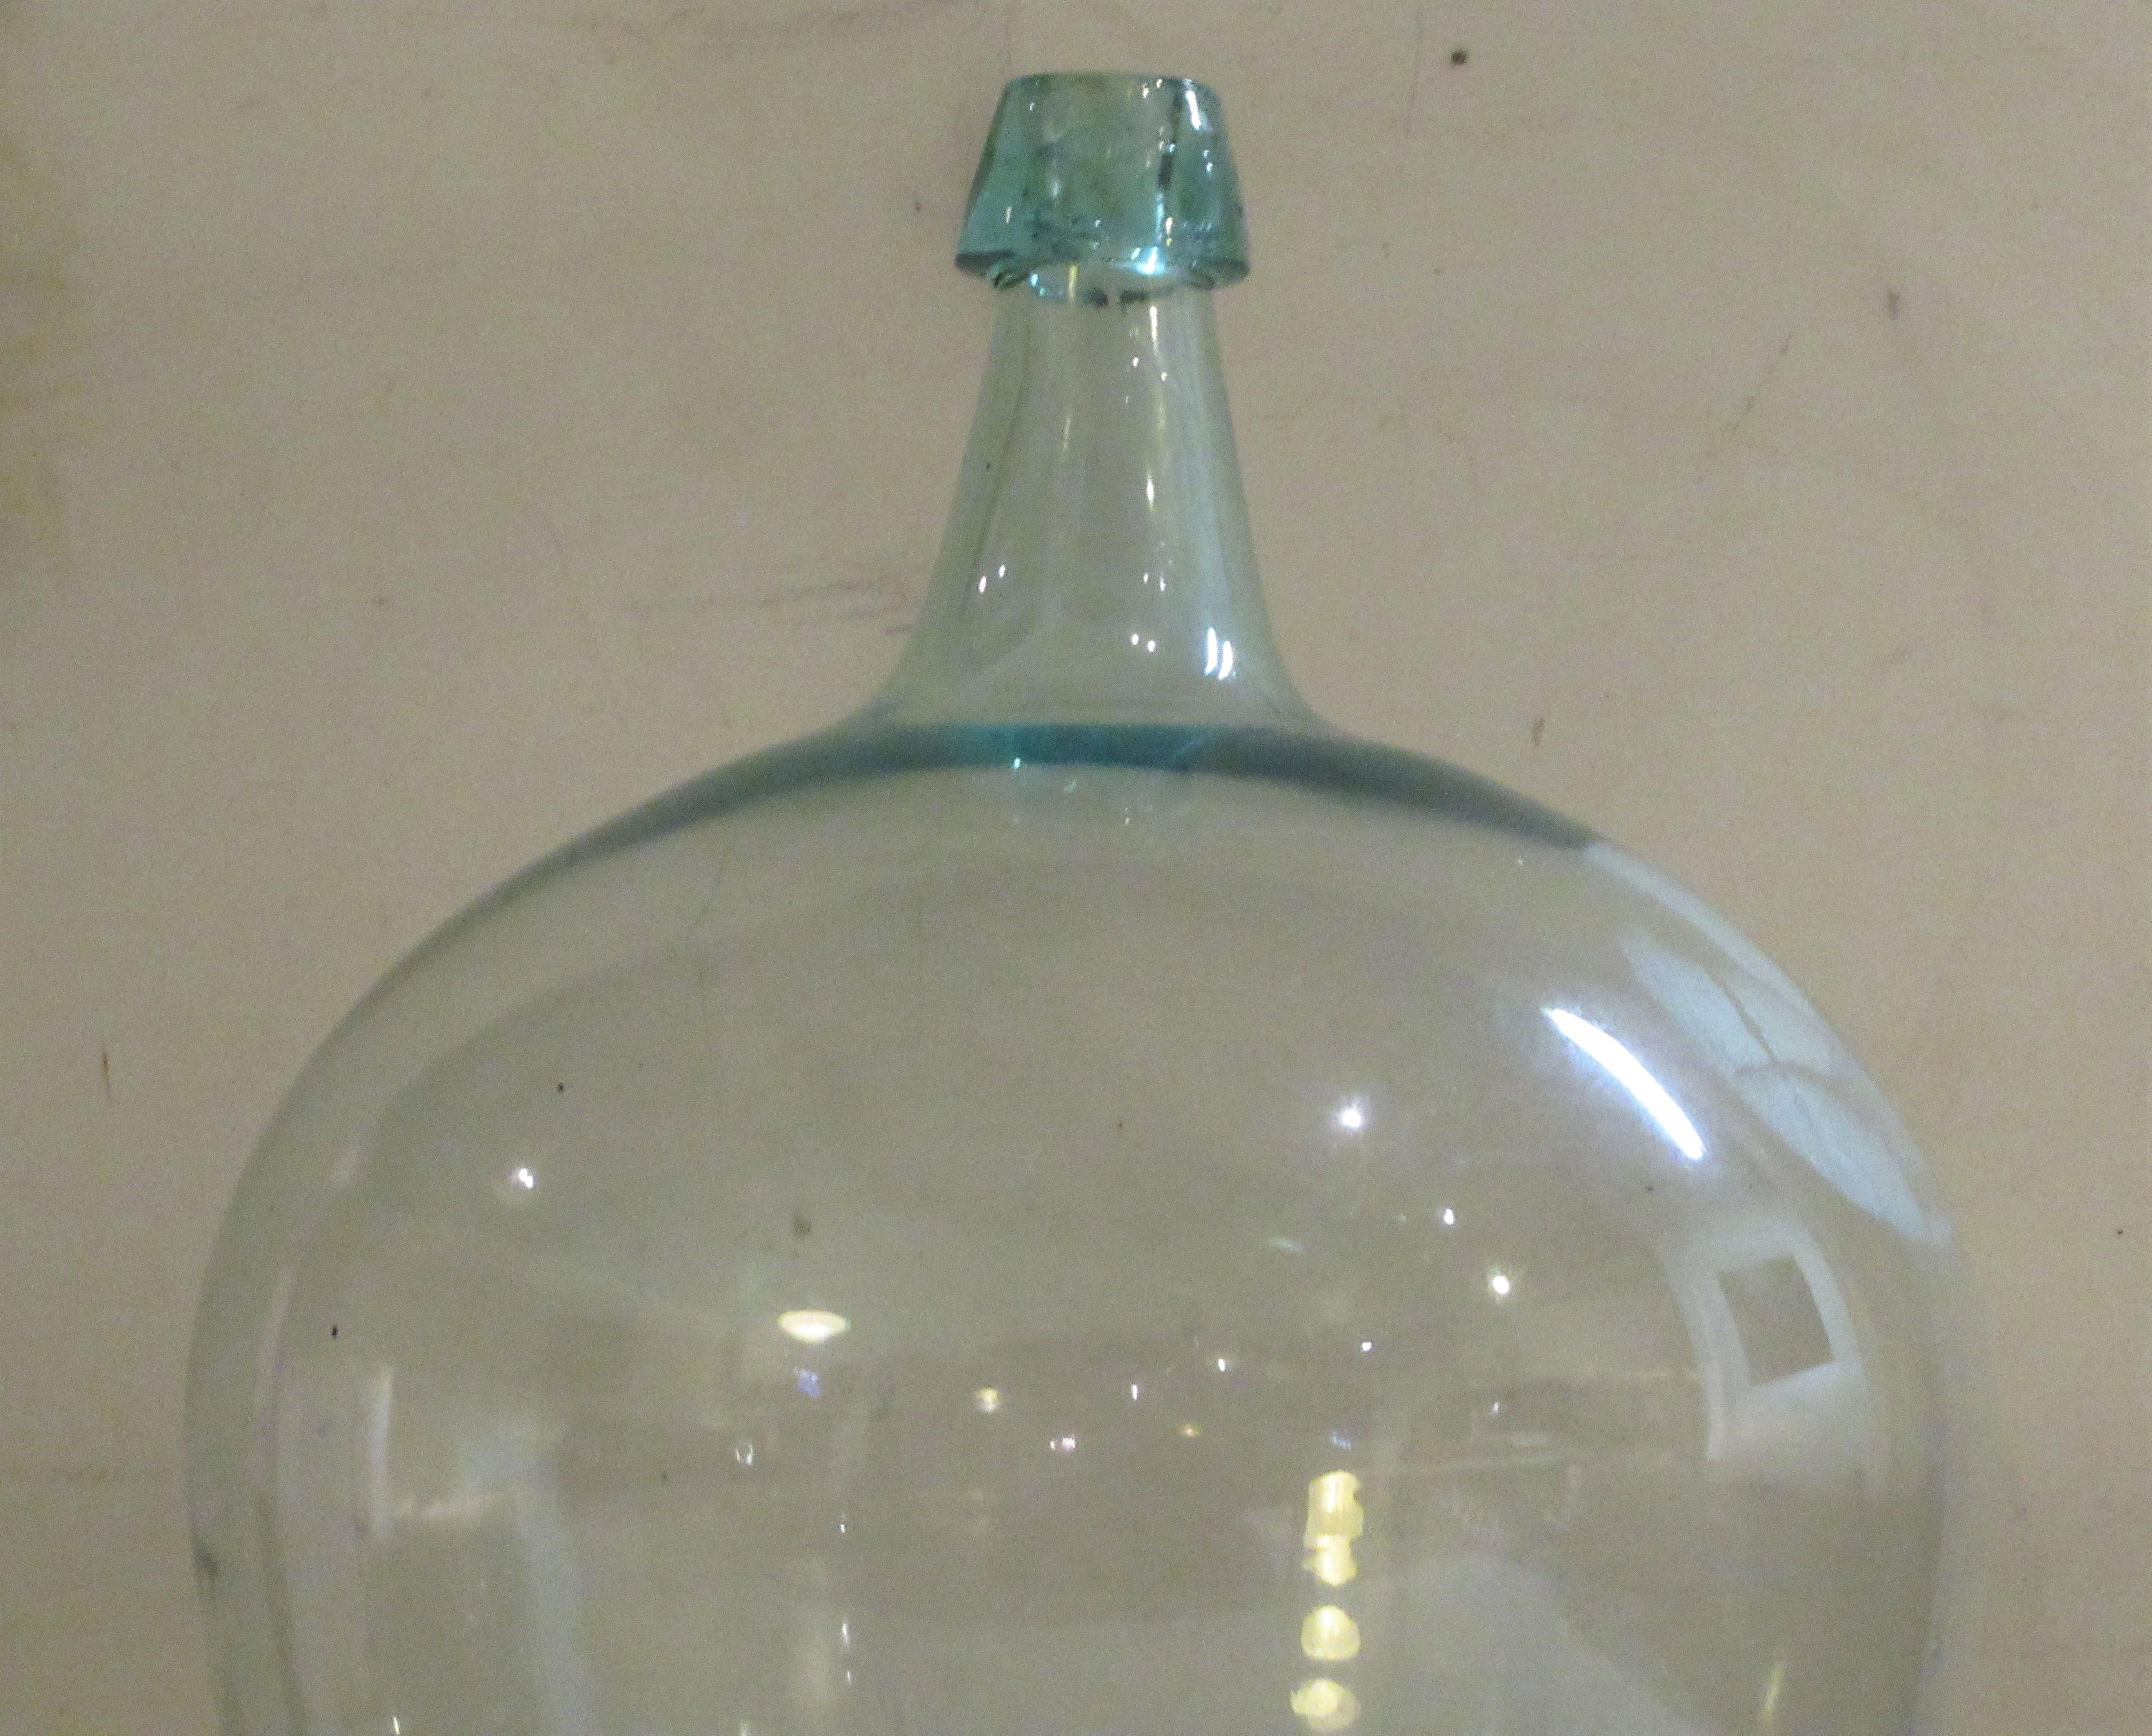 Antique 19th century pale aqua blown glass demijohn bottle with a beautiful bulbous form and deep dished pontil.